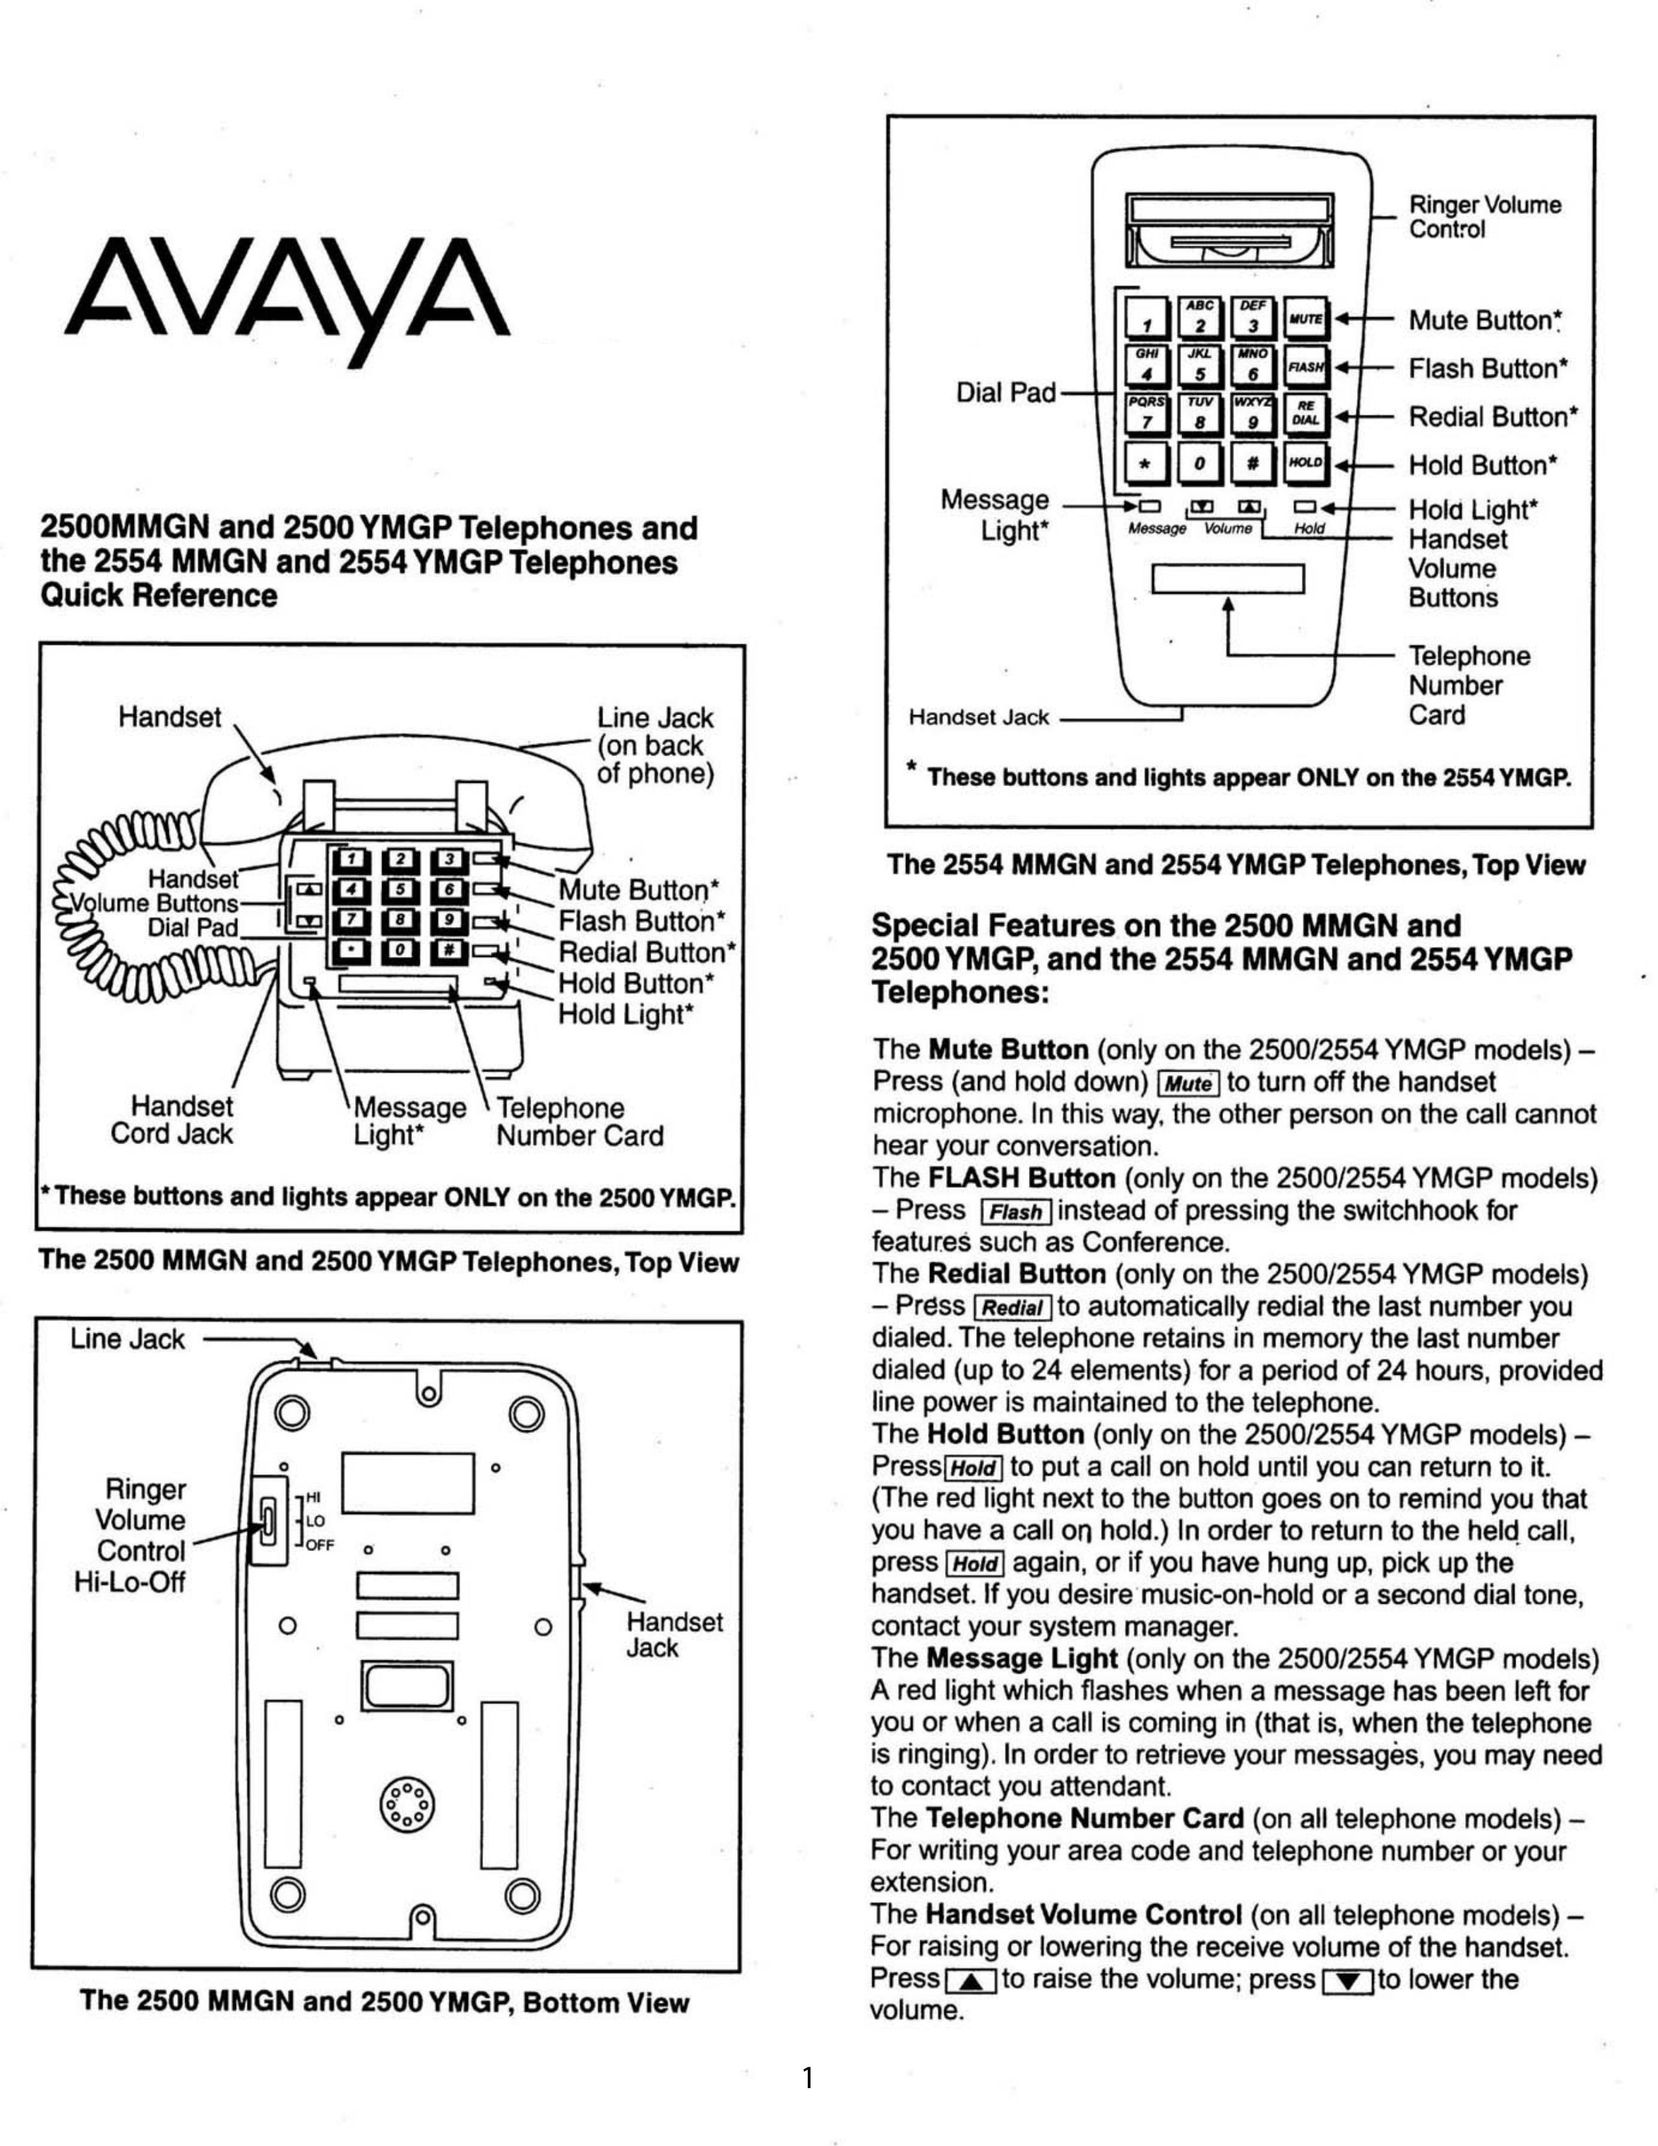 Avaya 2500 MMGN Cordless Telephone User Manual